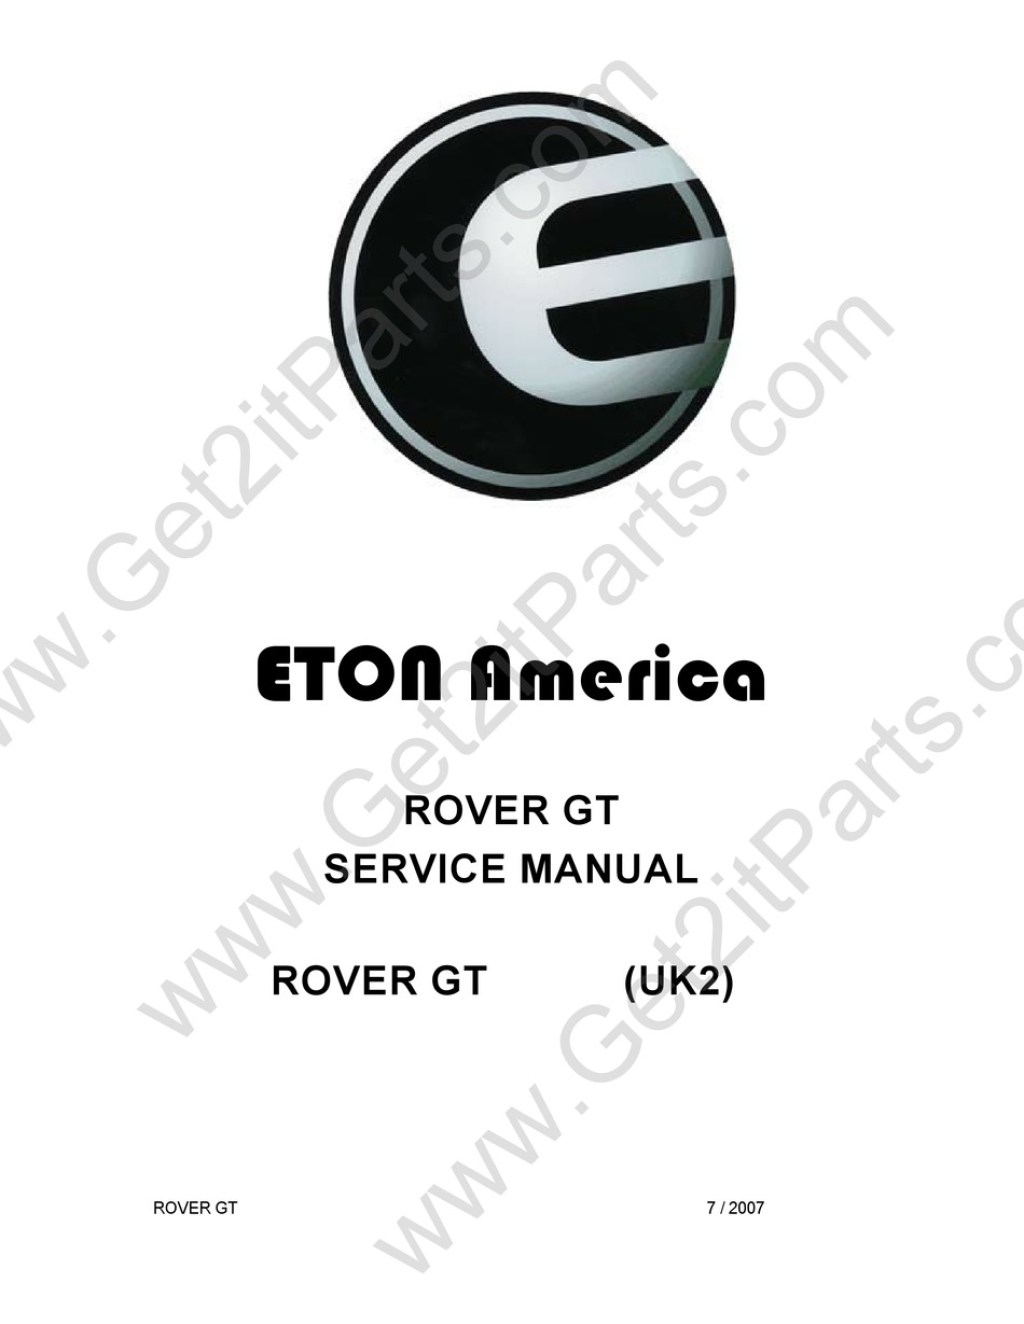 Picture of: ETON AMERICA ROVER GT SERVICE MANUAL Pdf Download  ManualsLib